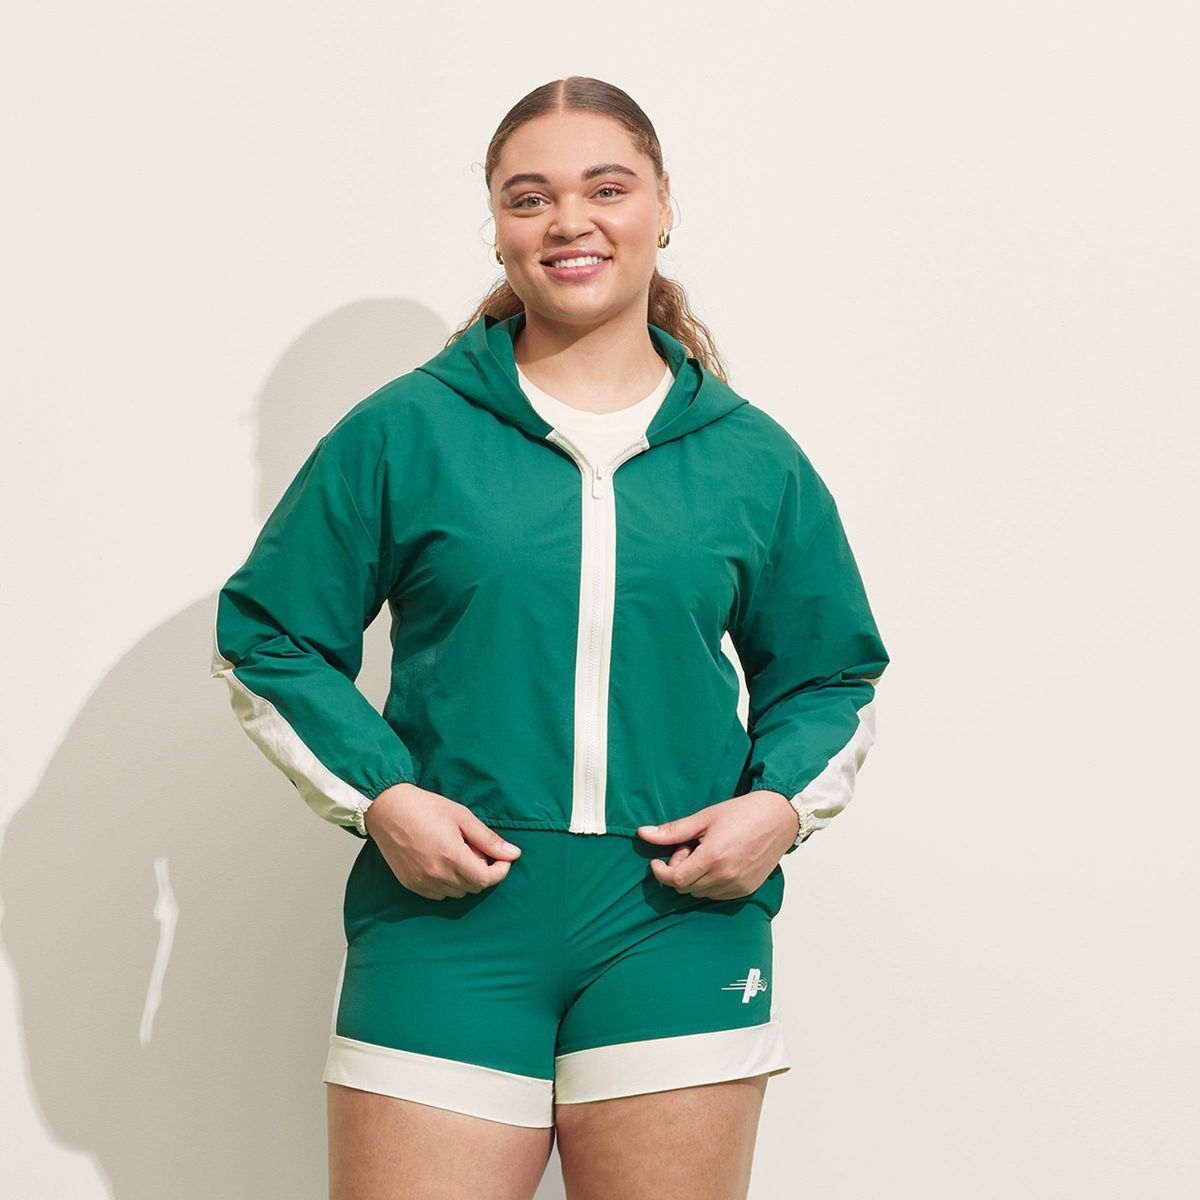 Prince Pickleball Women's Woven Zip-Front Hooded Jacket - Green | Target